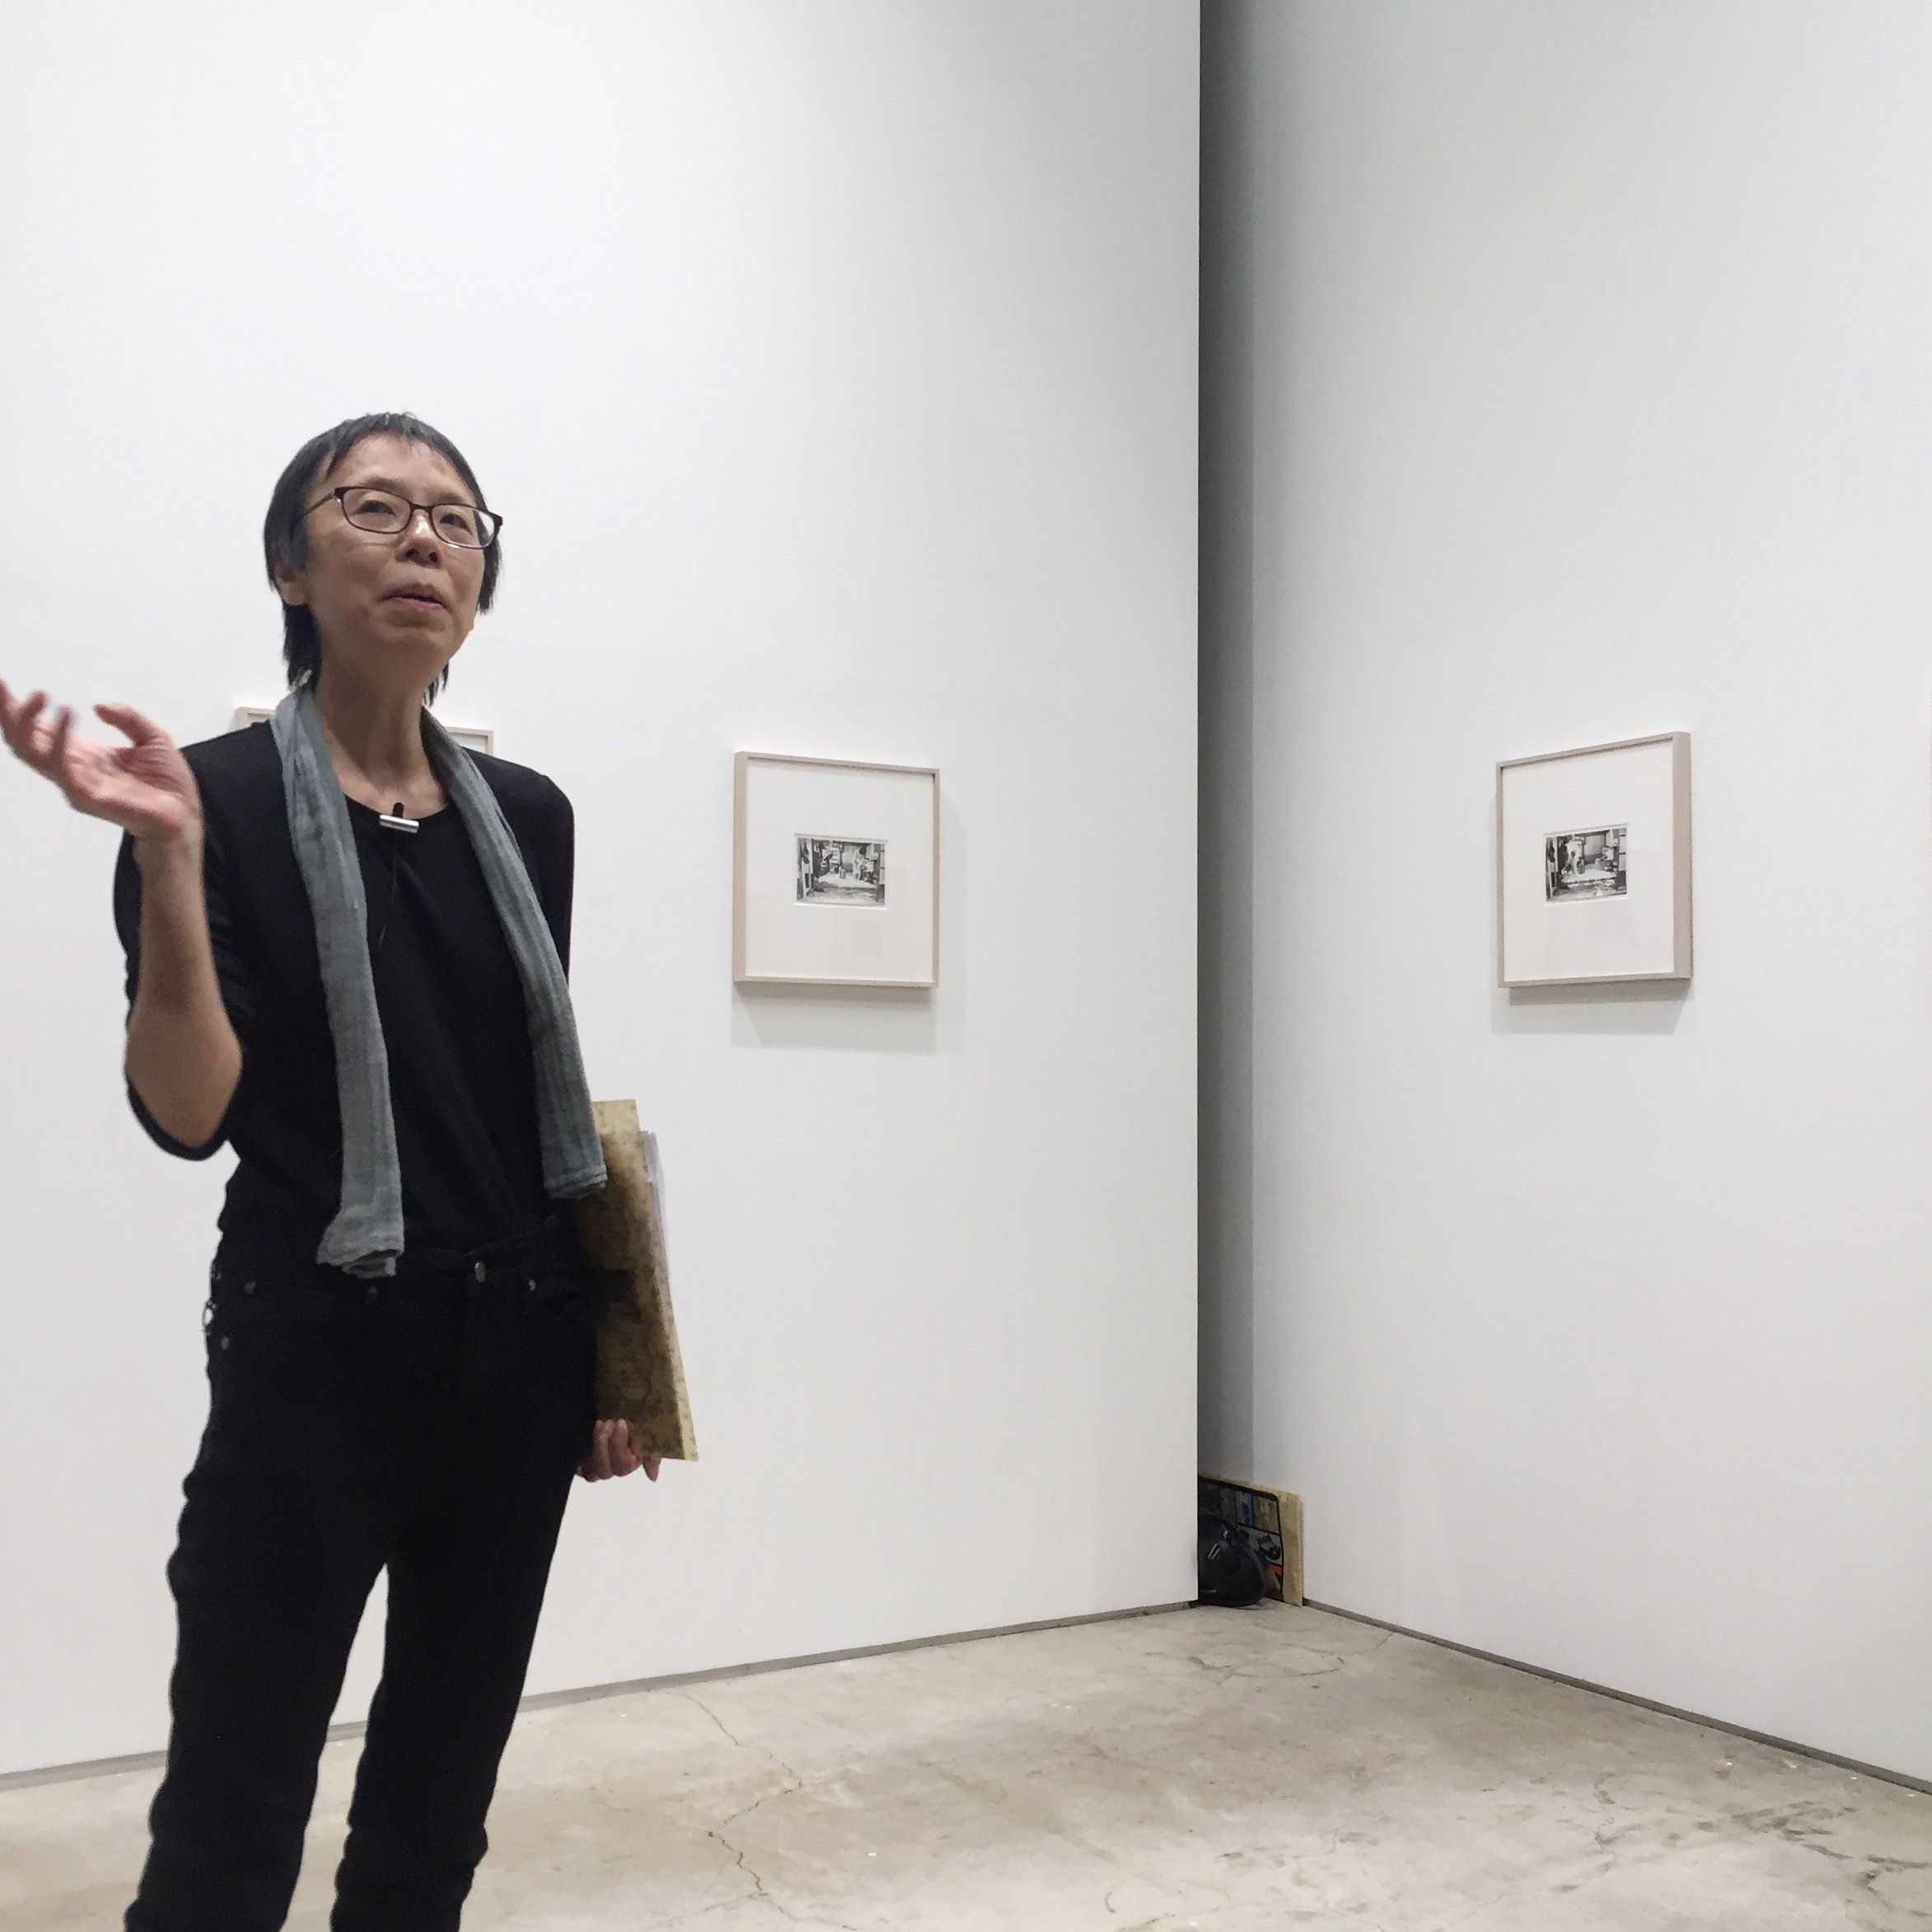 Talk by Tomii Reiko (art historian)